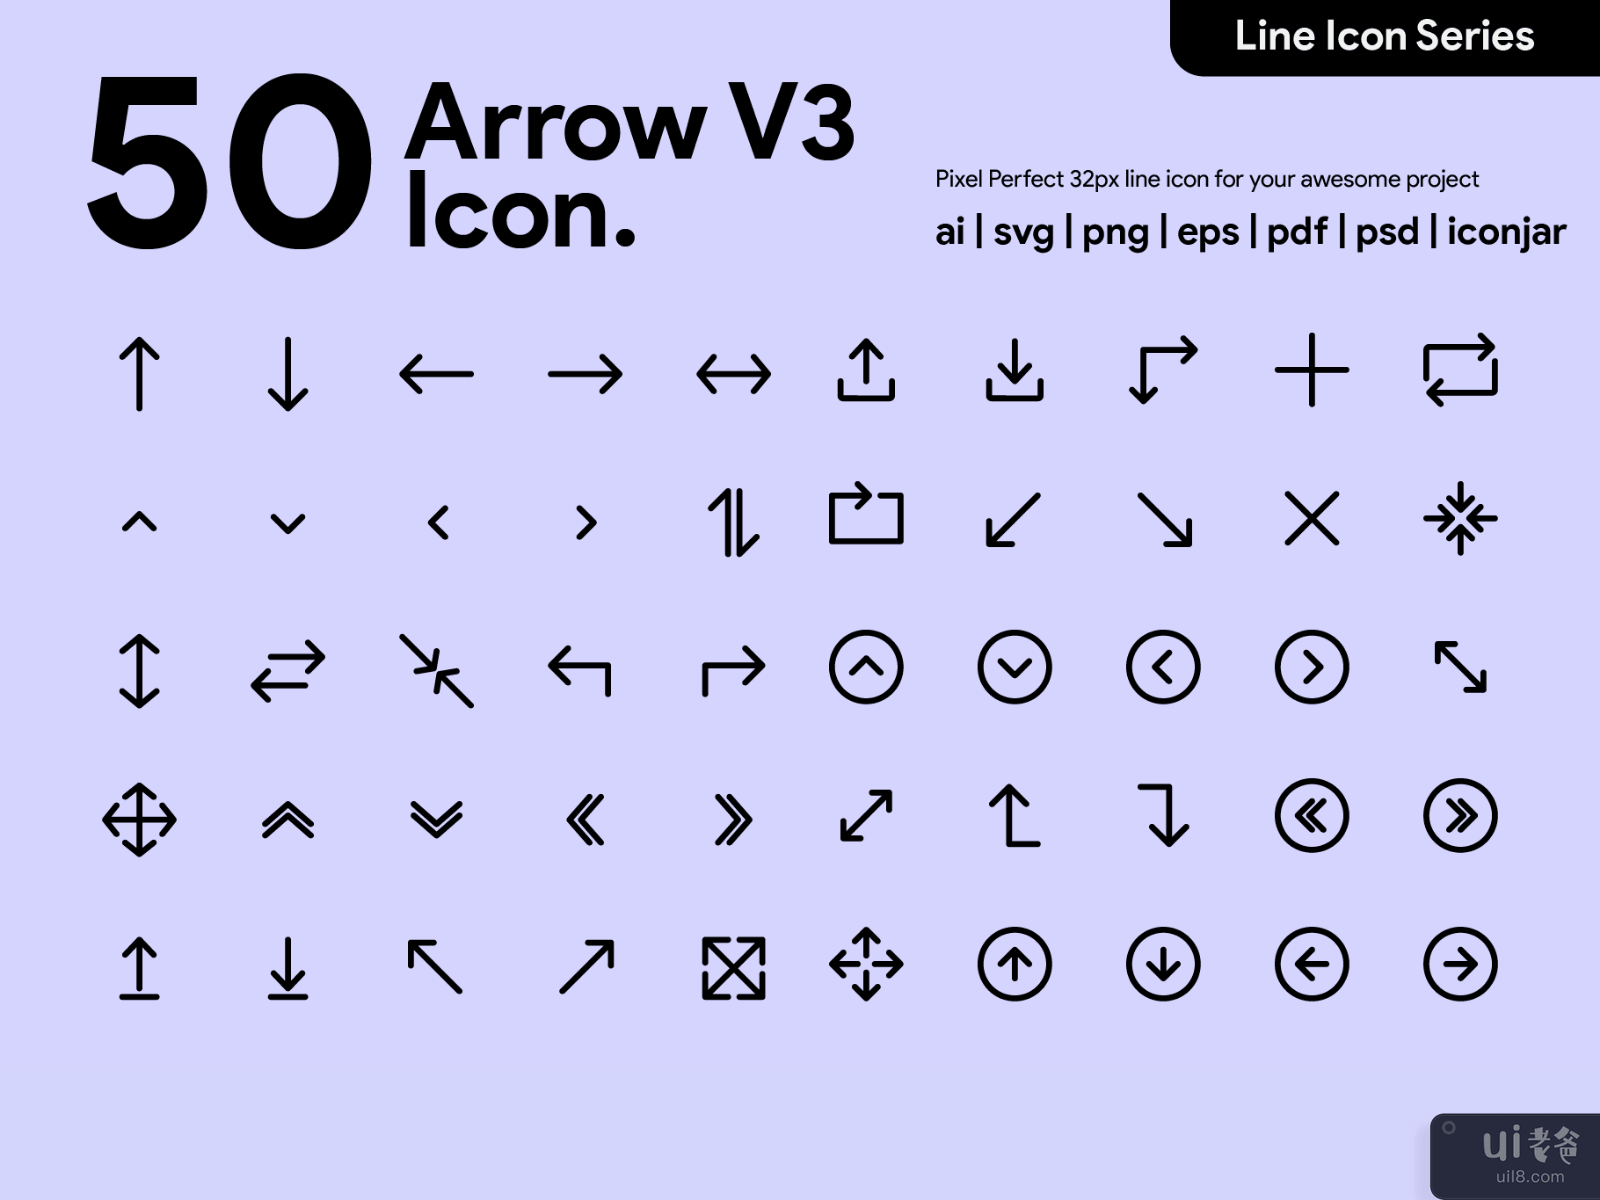 Kawaicon - Arrow Line Icon